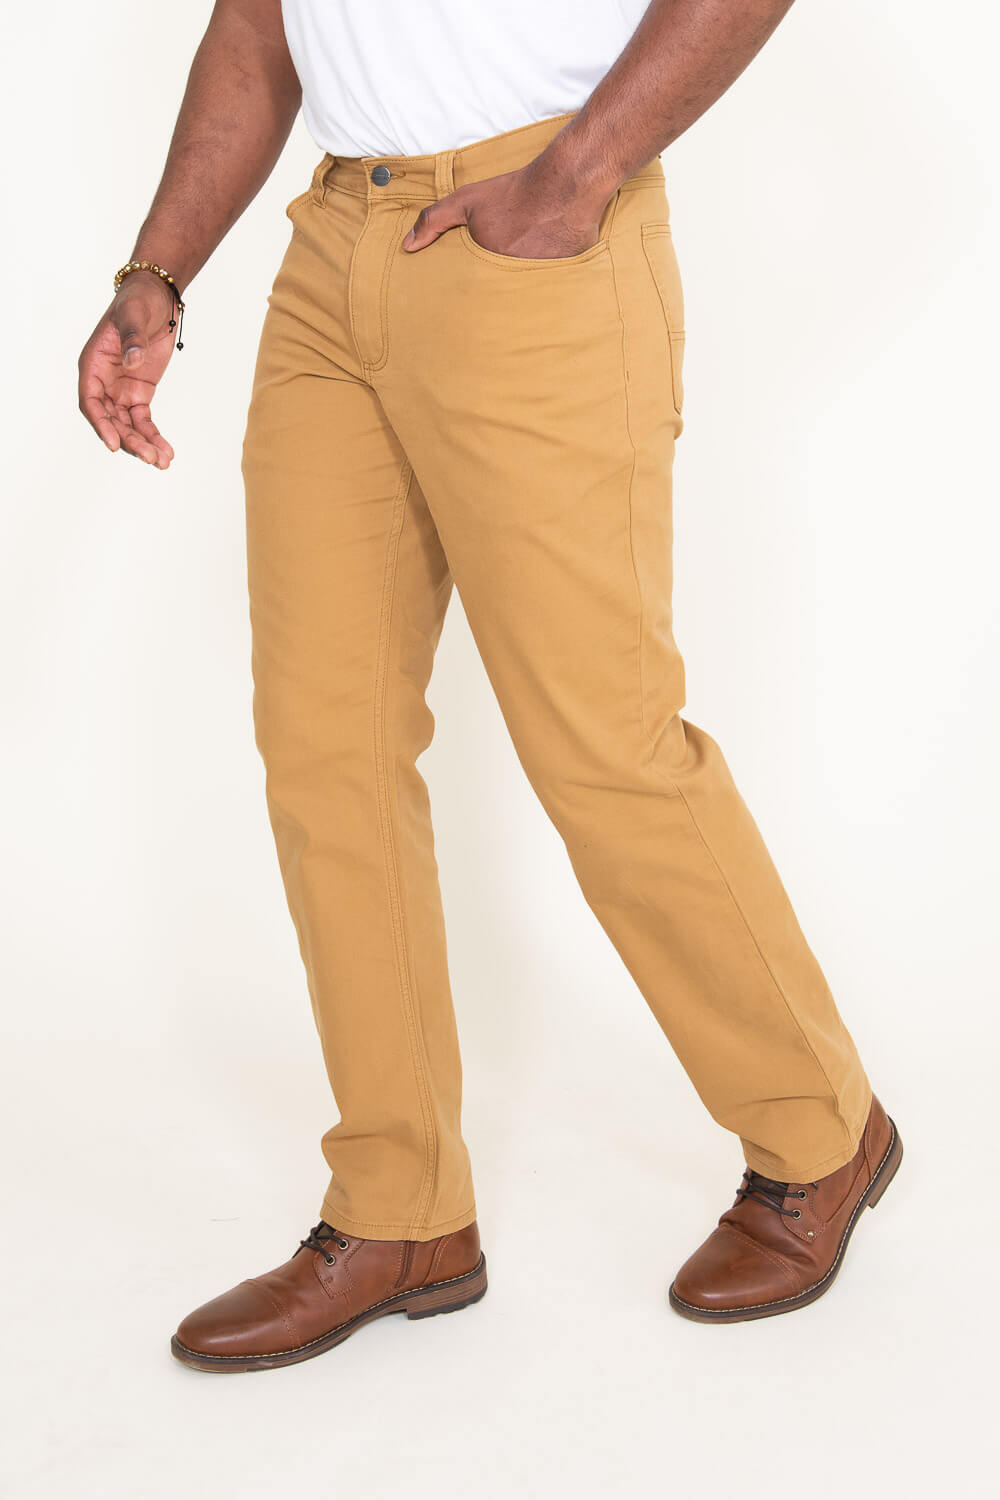 Carhartt Rugged Flex Pants for Men in Brown